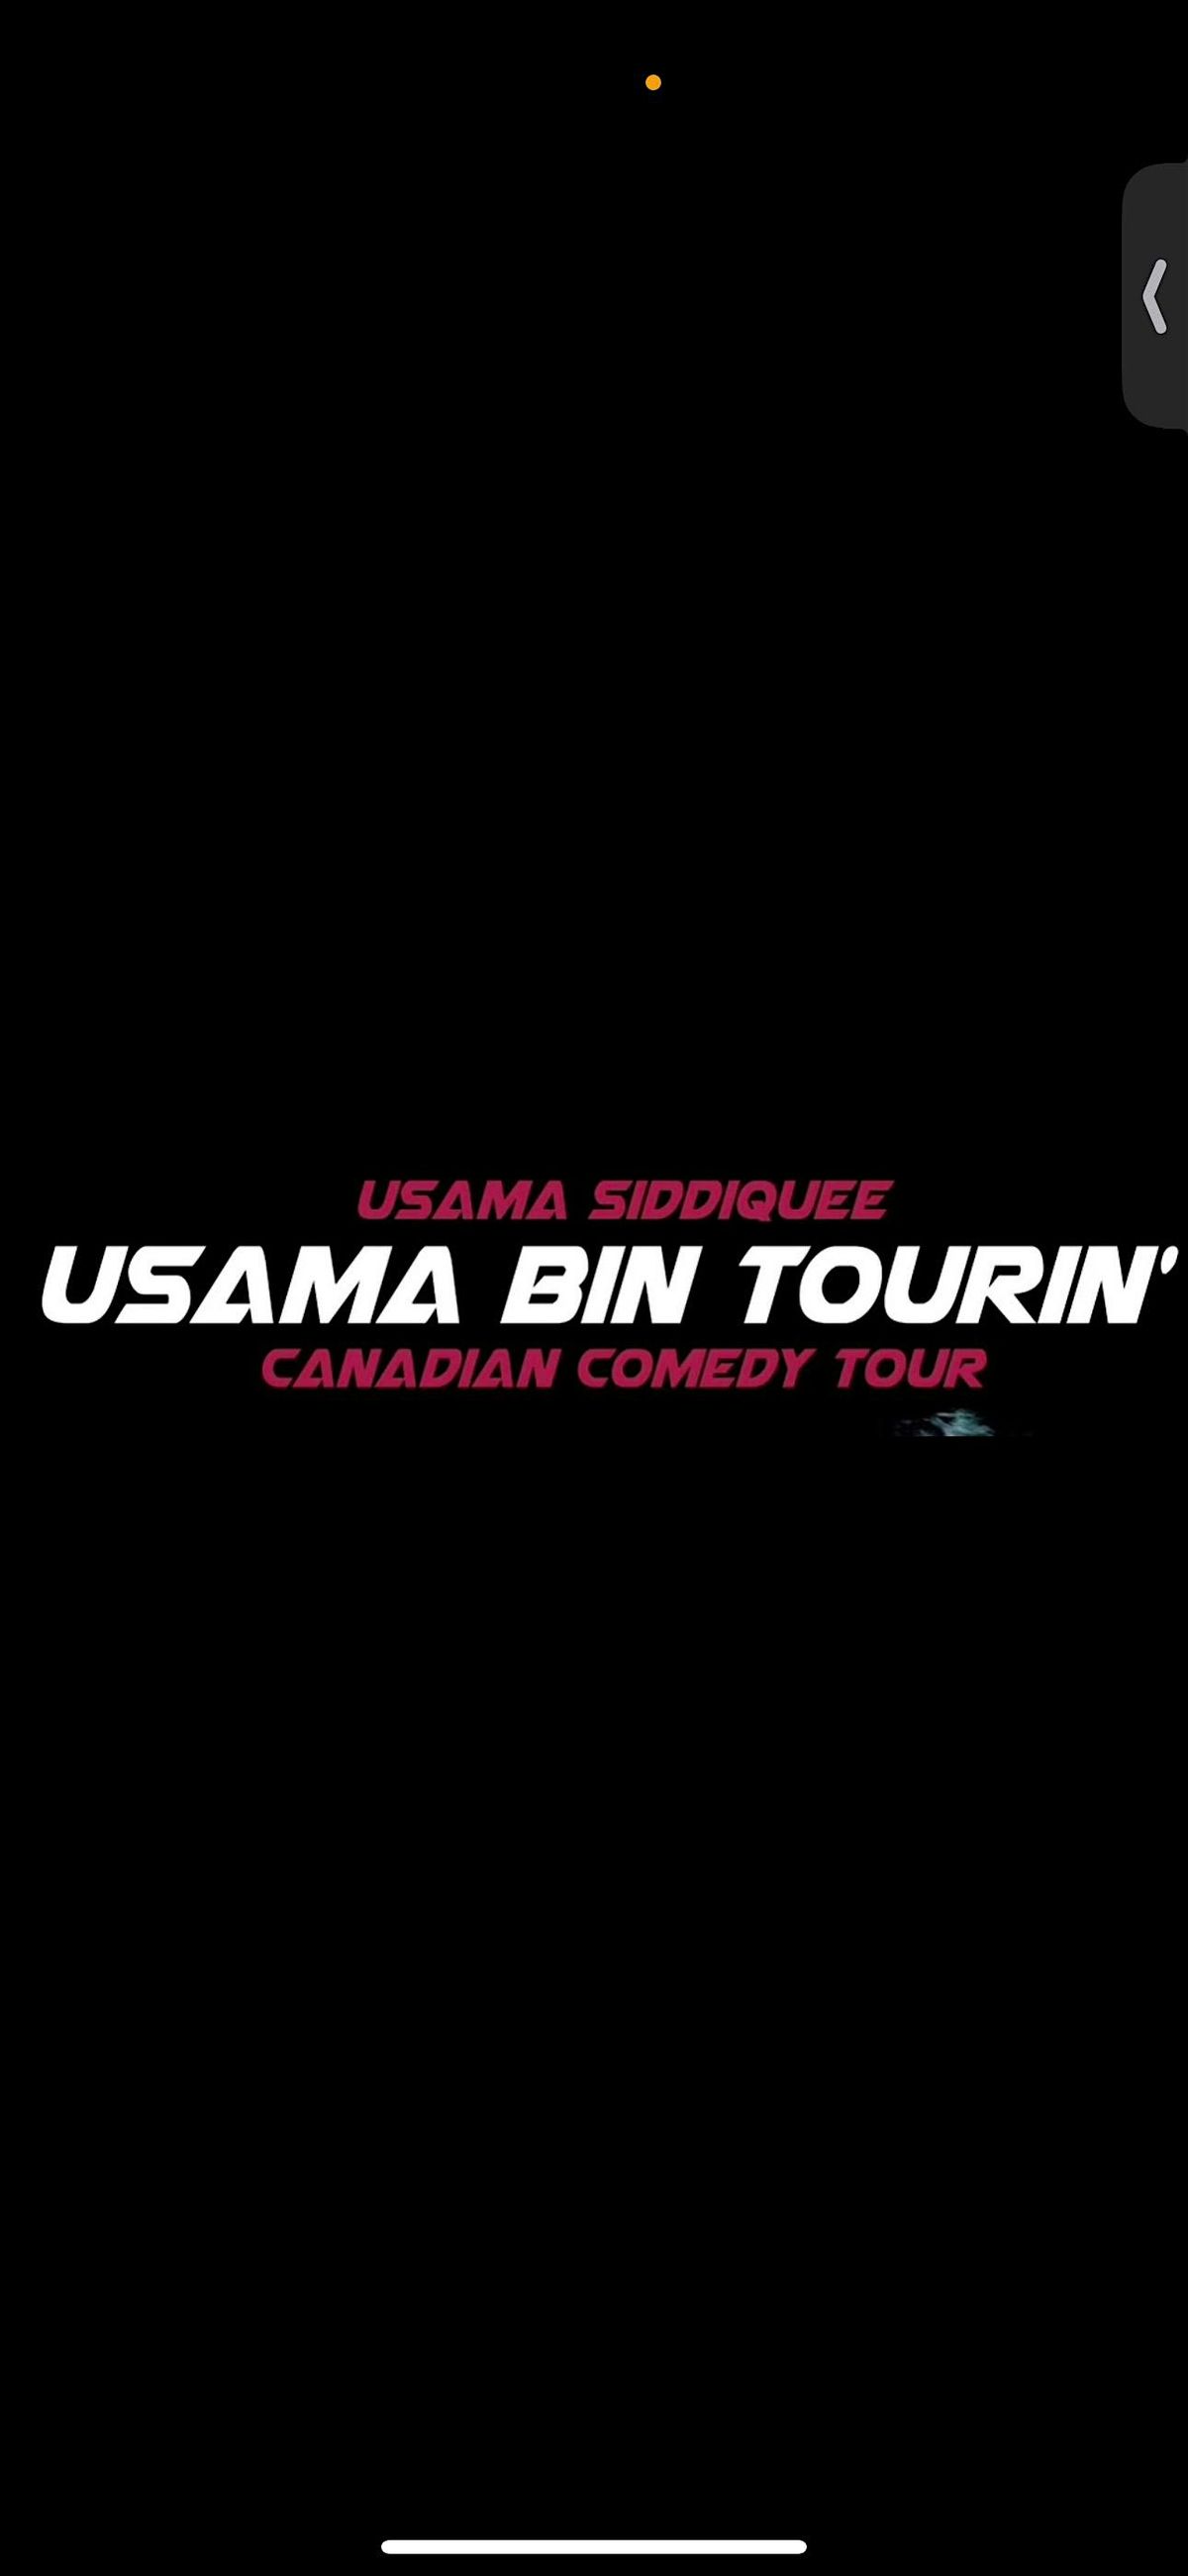 Usama Siddiquee: 'USAMA BIN TOURIN' Canadian Comedy Tour